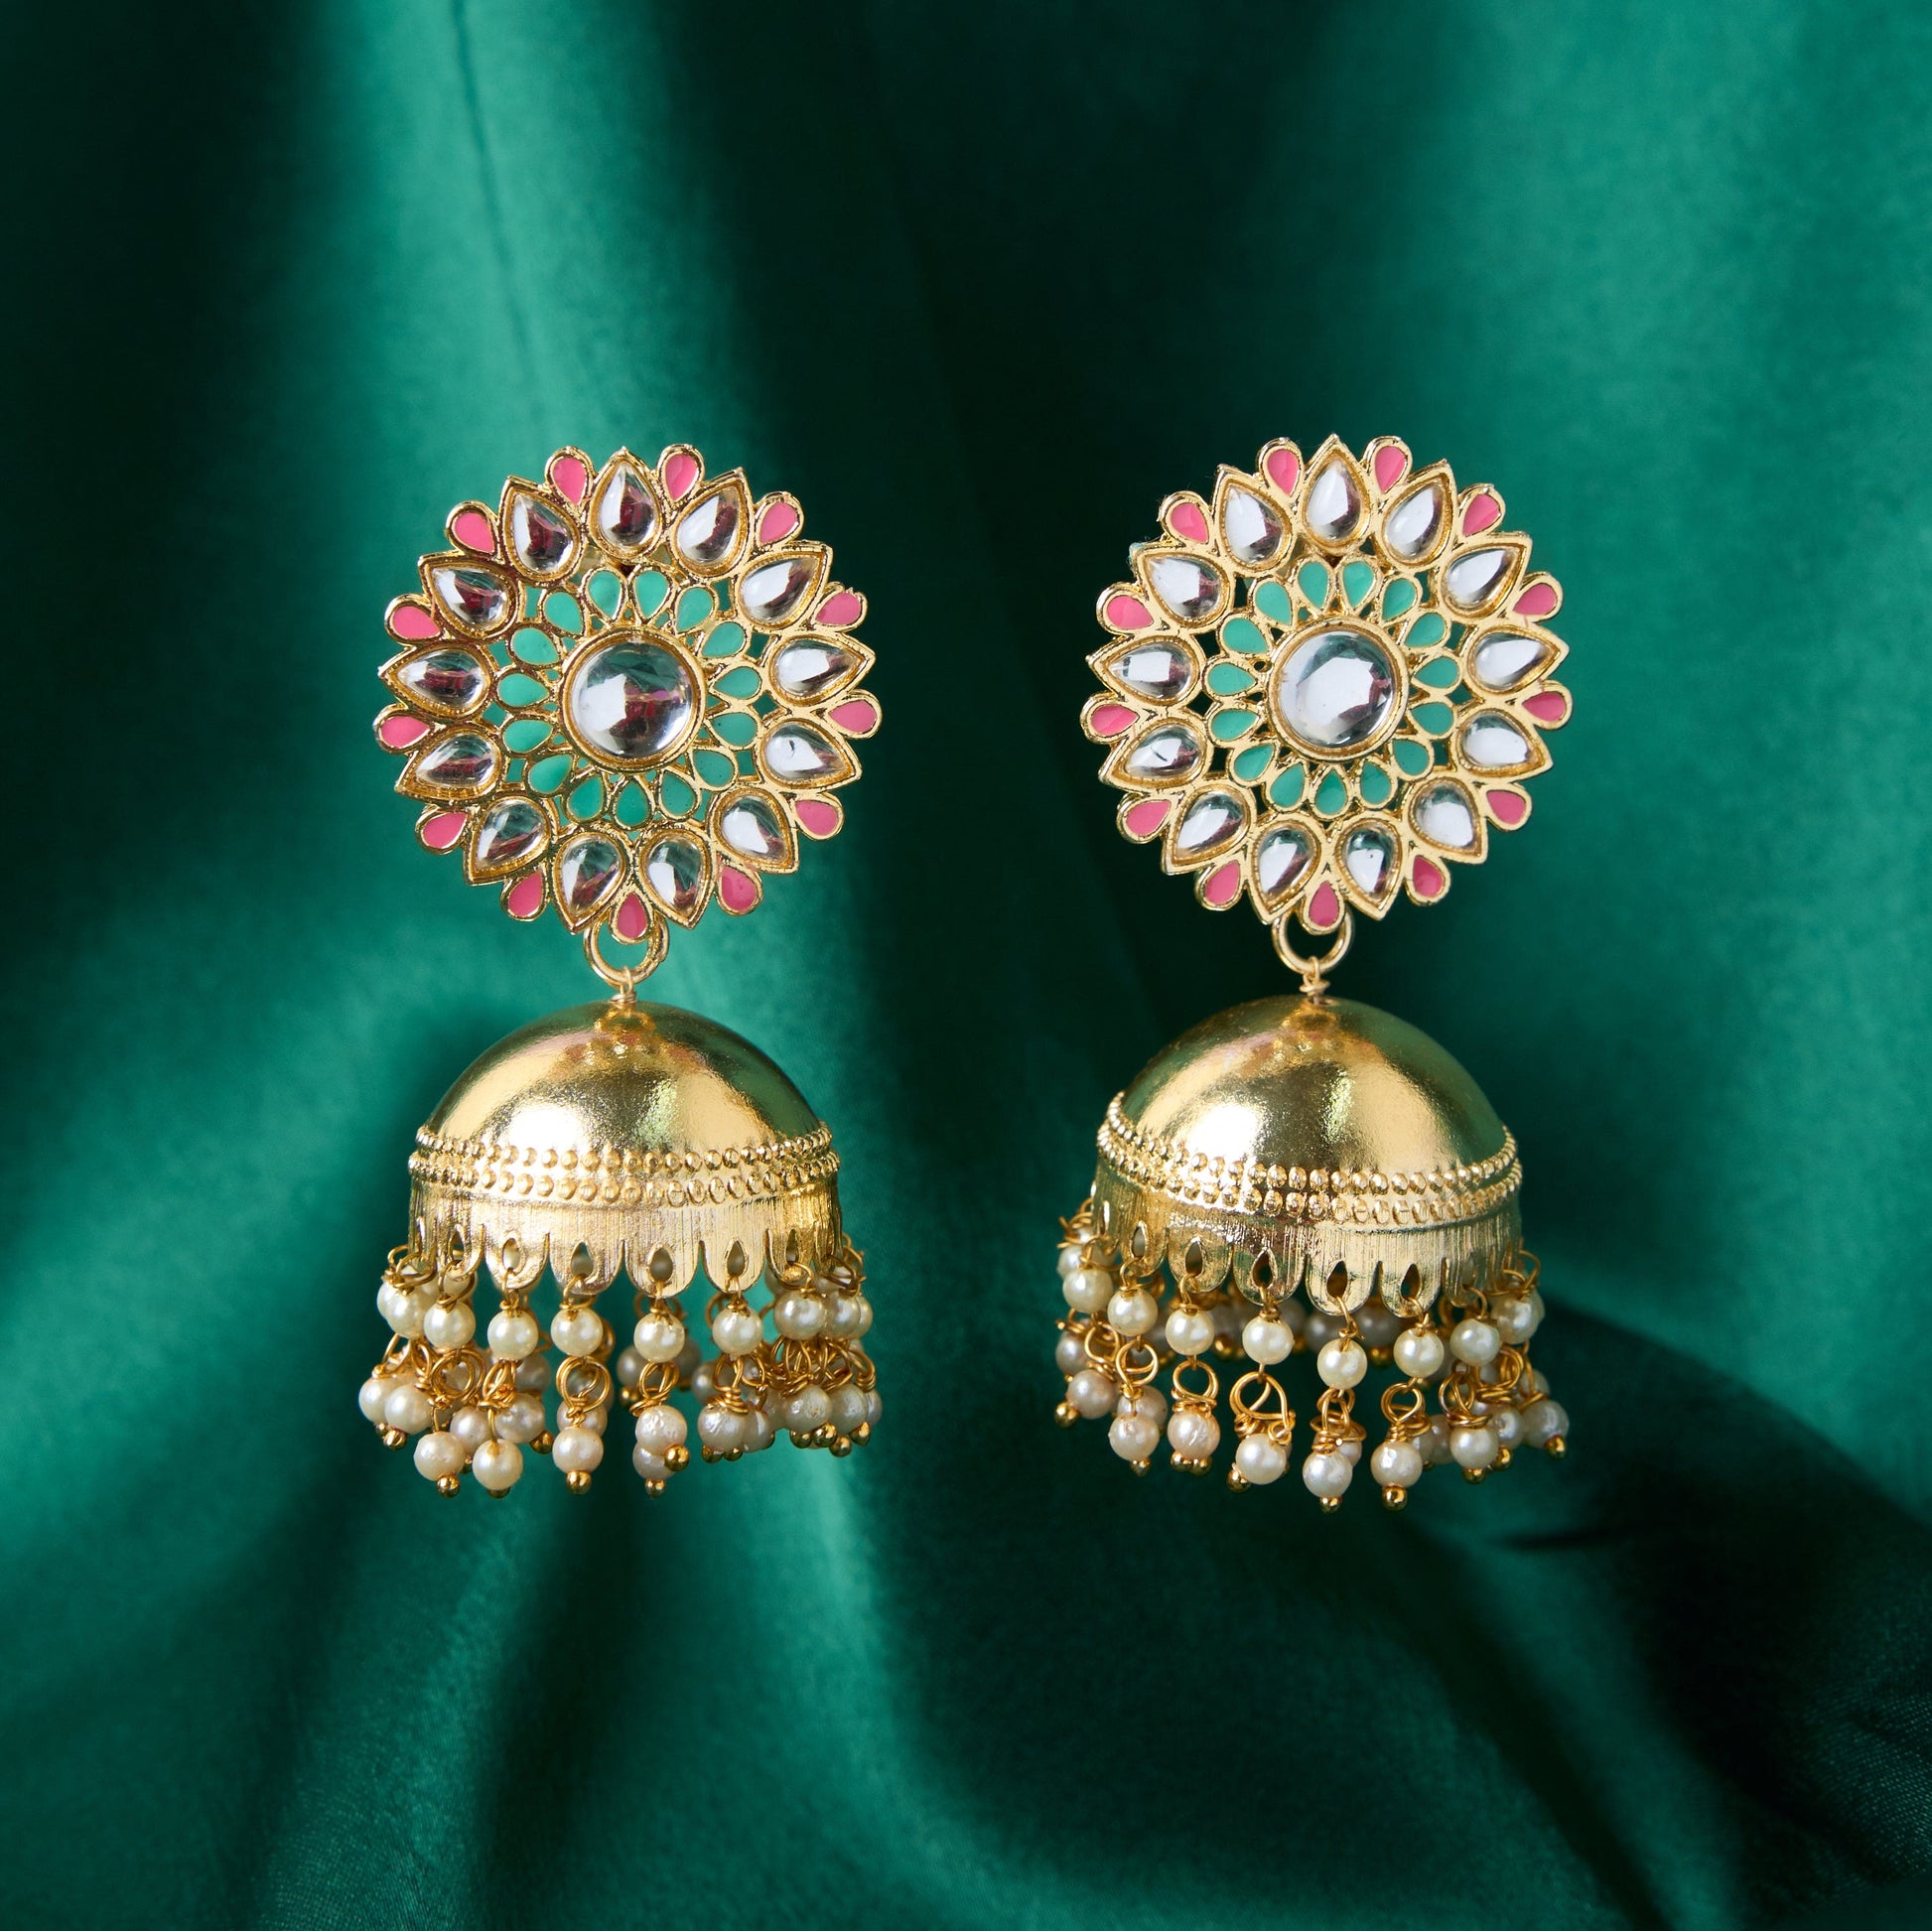 Moonstruck Traditional Inidian Golden Jhumka/Jhumki Earrings With Pearls for Women (Green, Pink) - www.MoonstruckINC.com